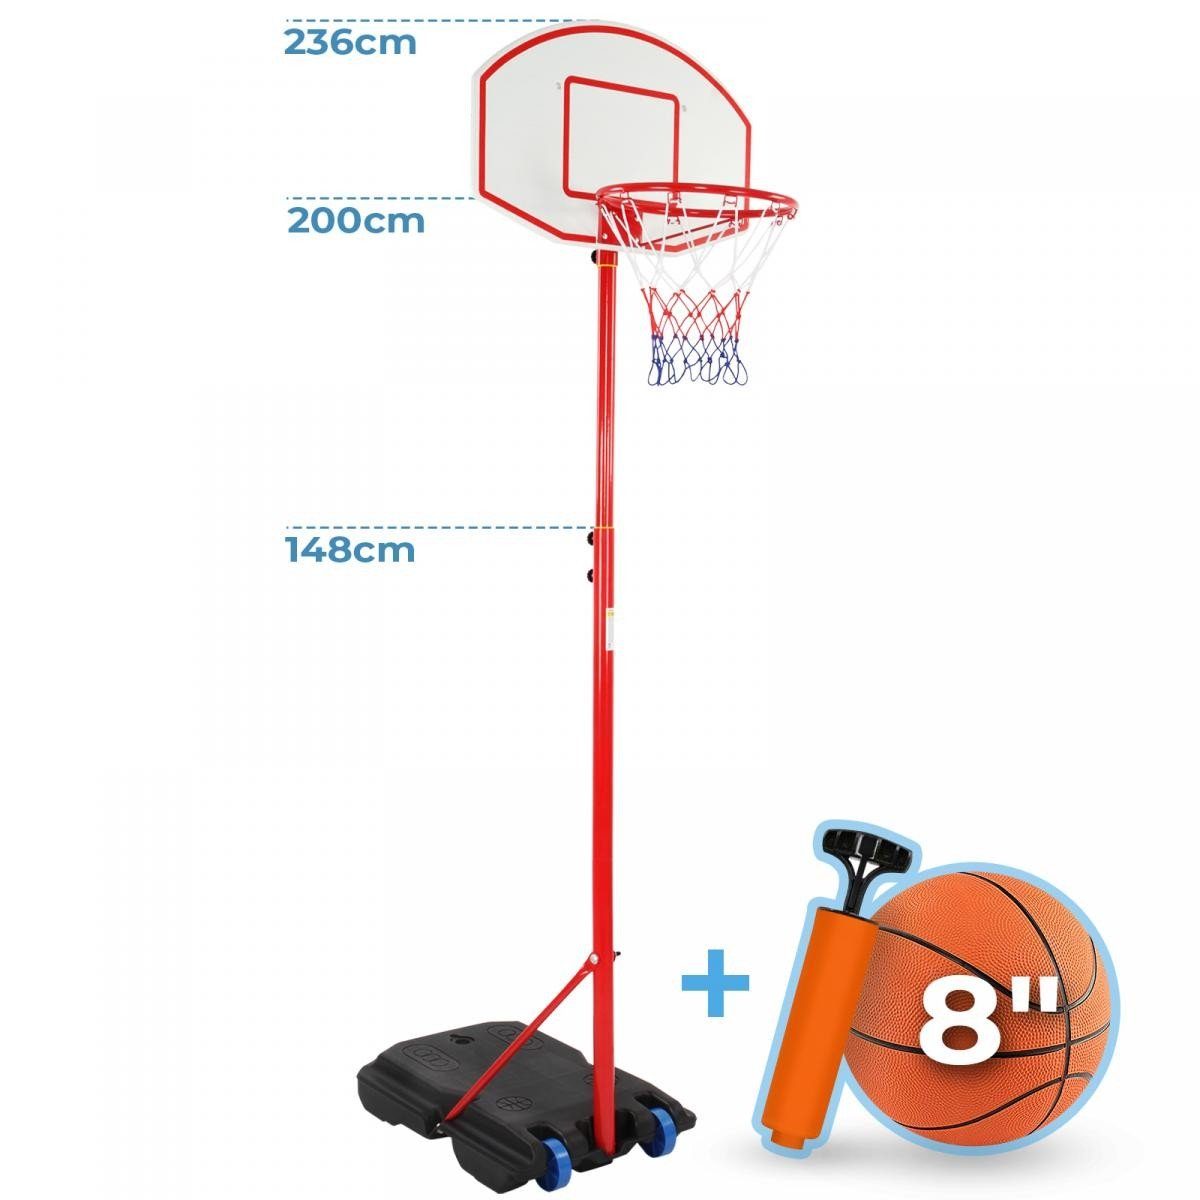 Basketballkorb Basketballständer Korbanlage Kinder Sport Basketball Spiezeug DE 